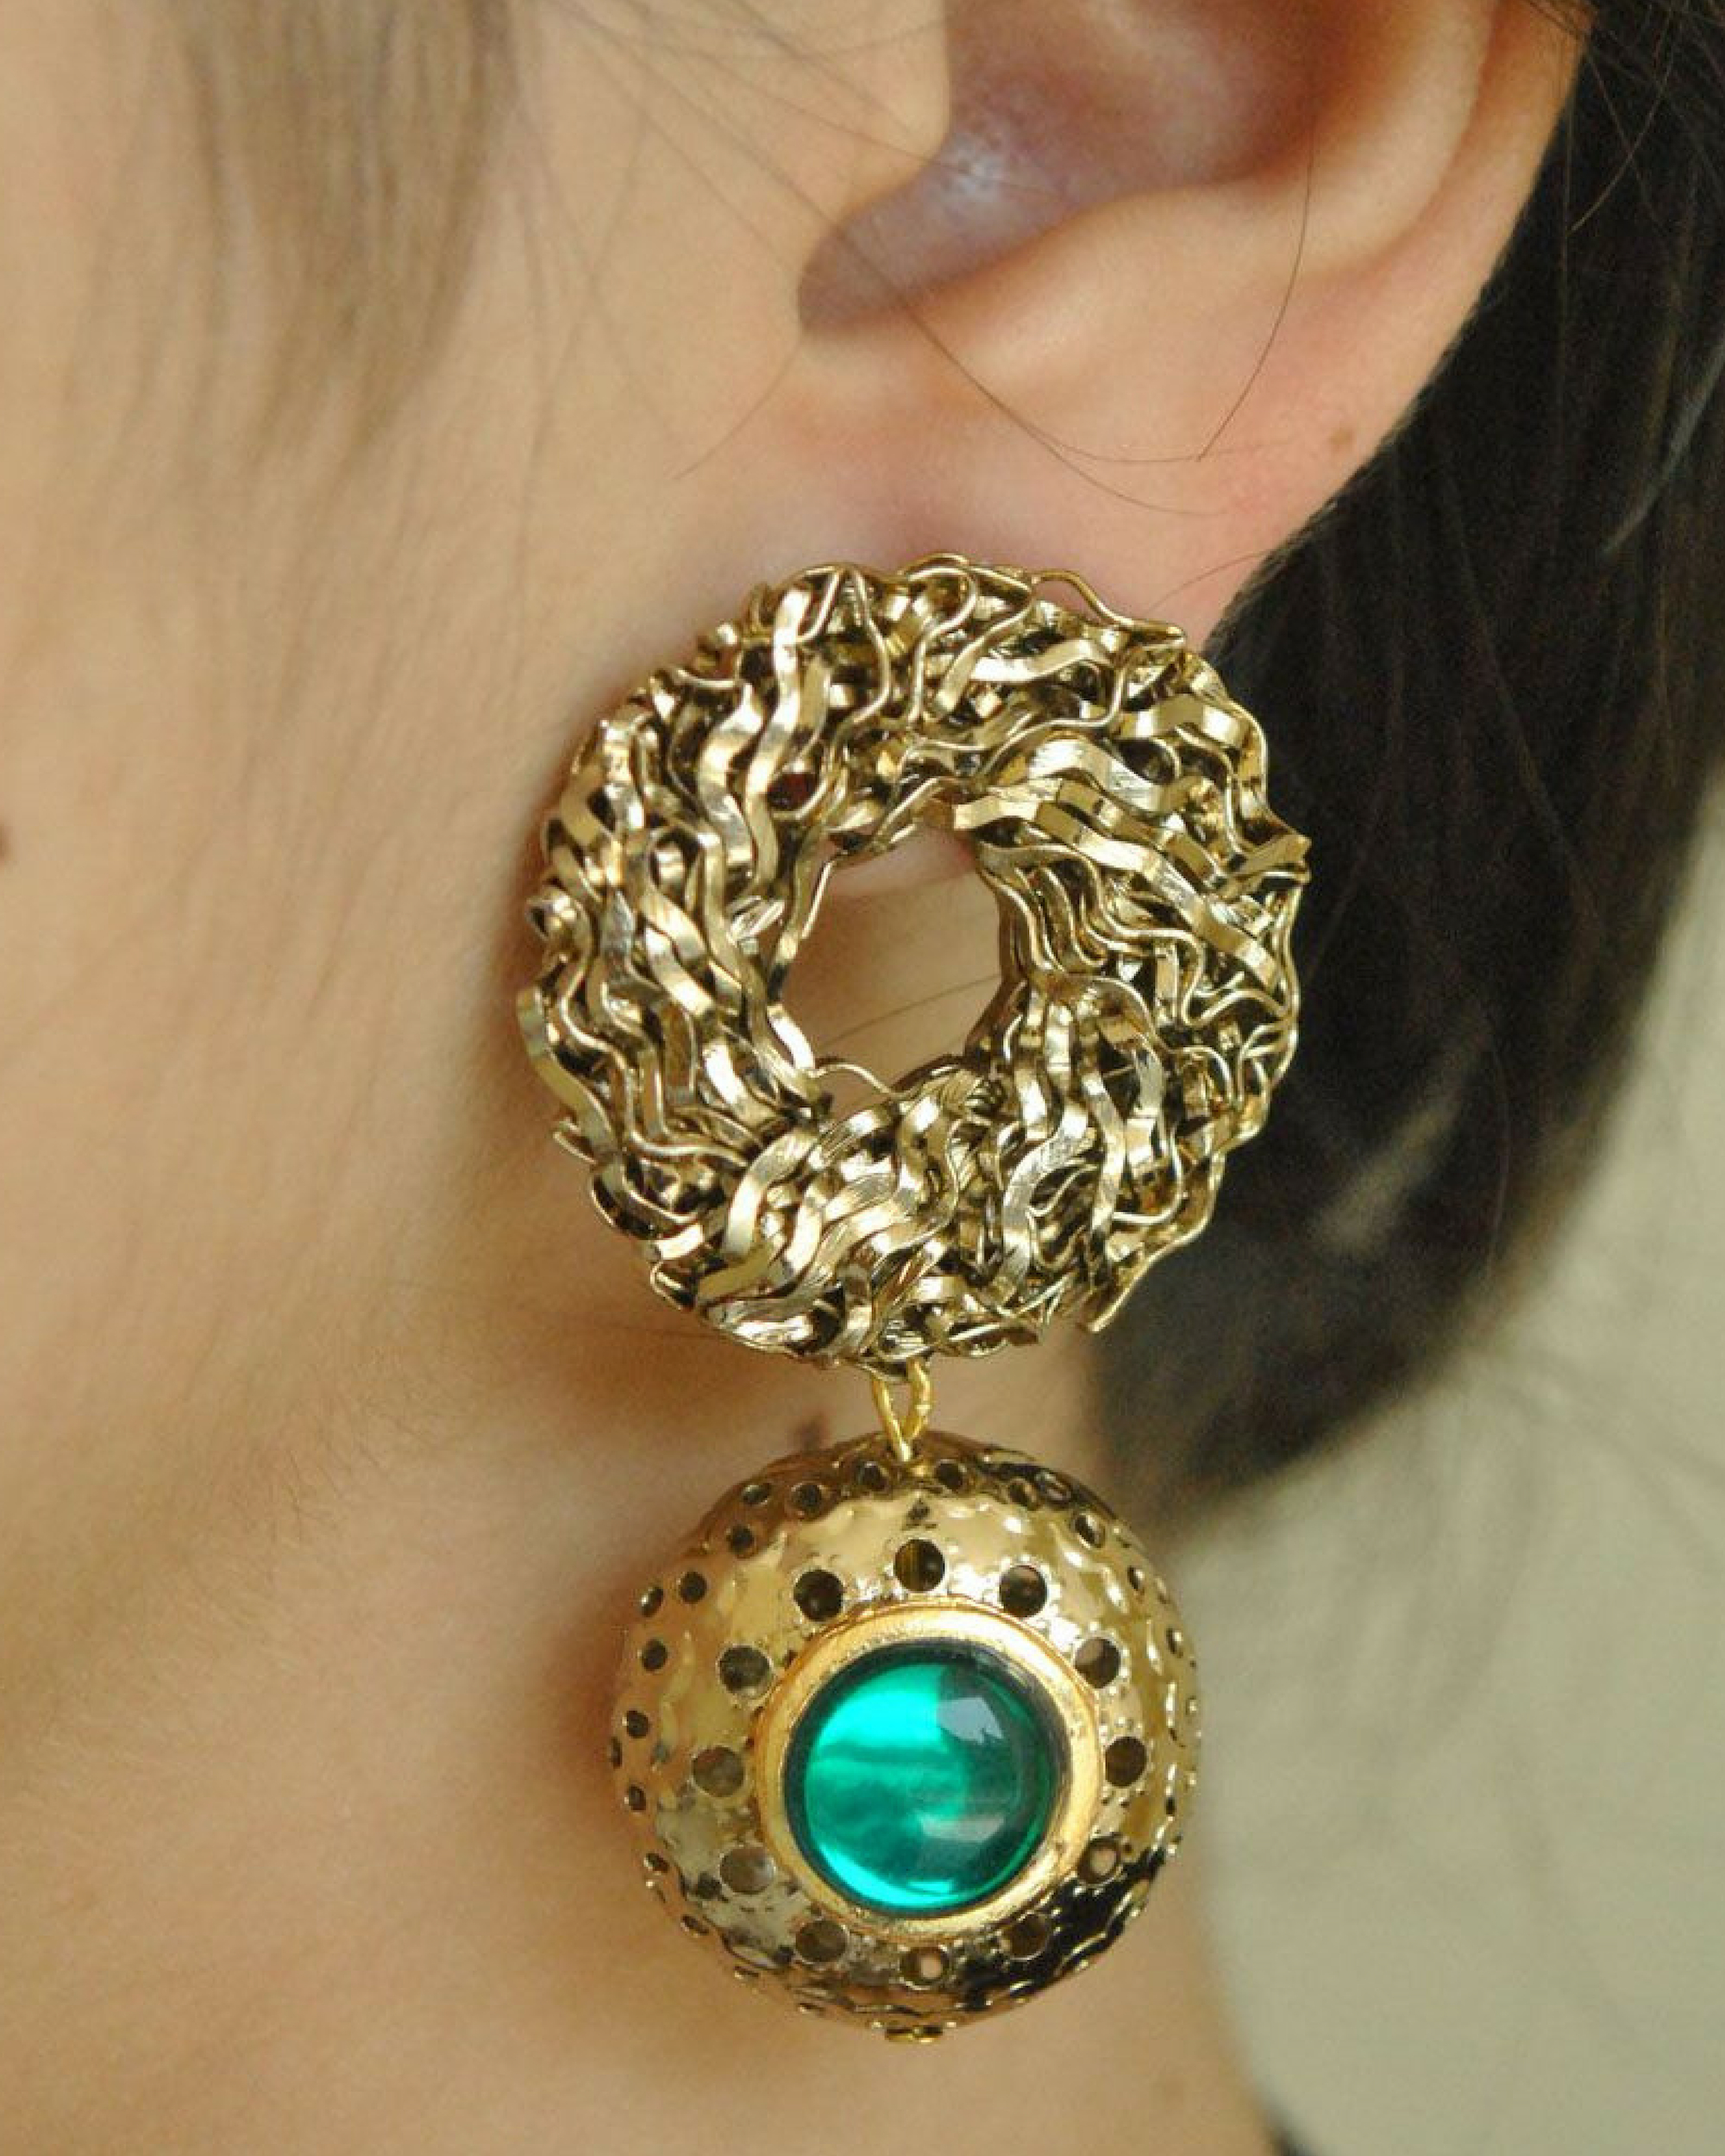 Green and golden filigree earrings